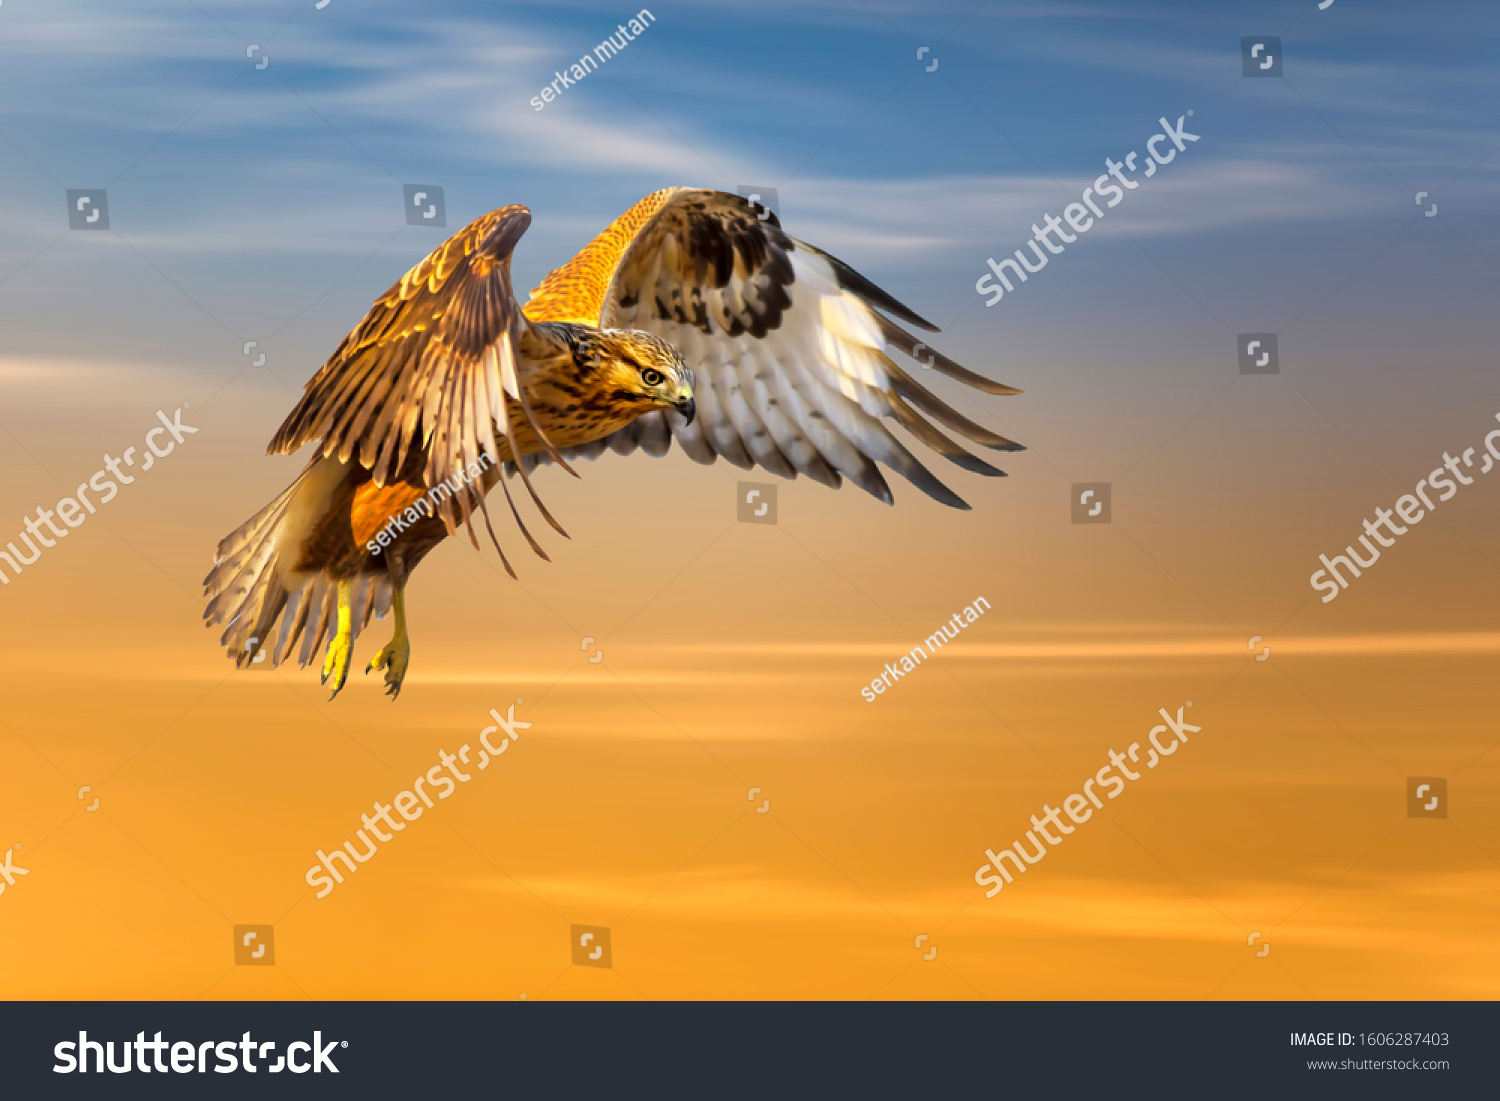 Flying bird. Bird of prey. Colorful sky background.  #1606287403